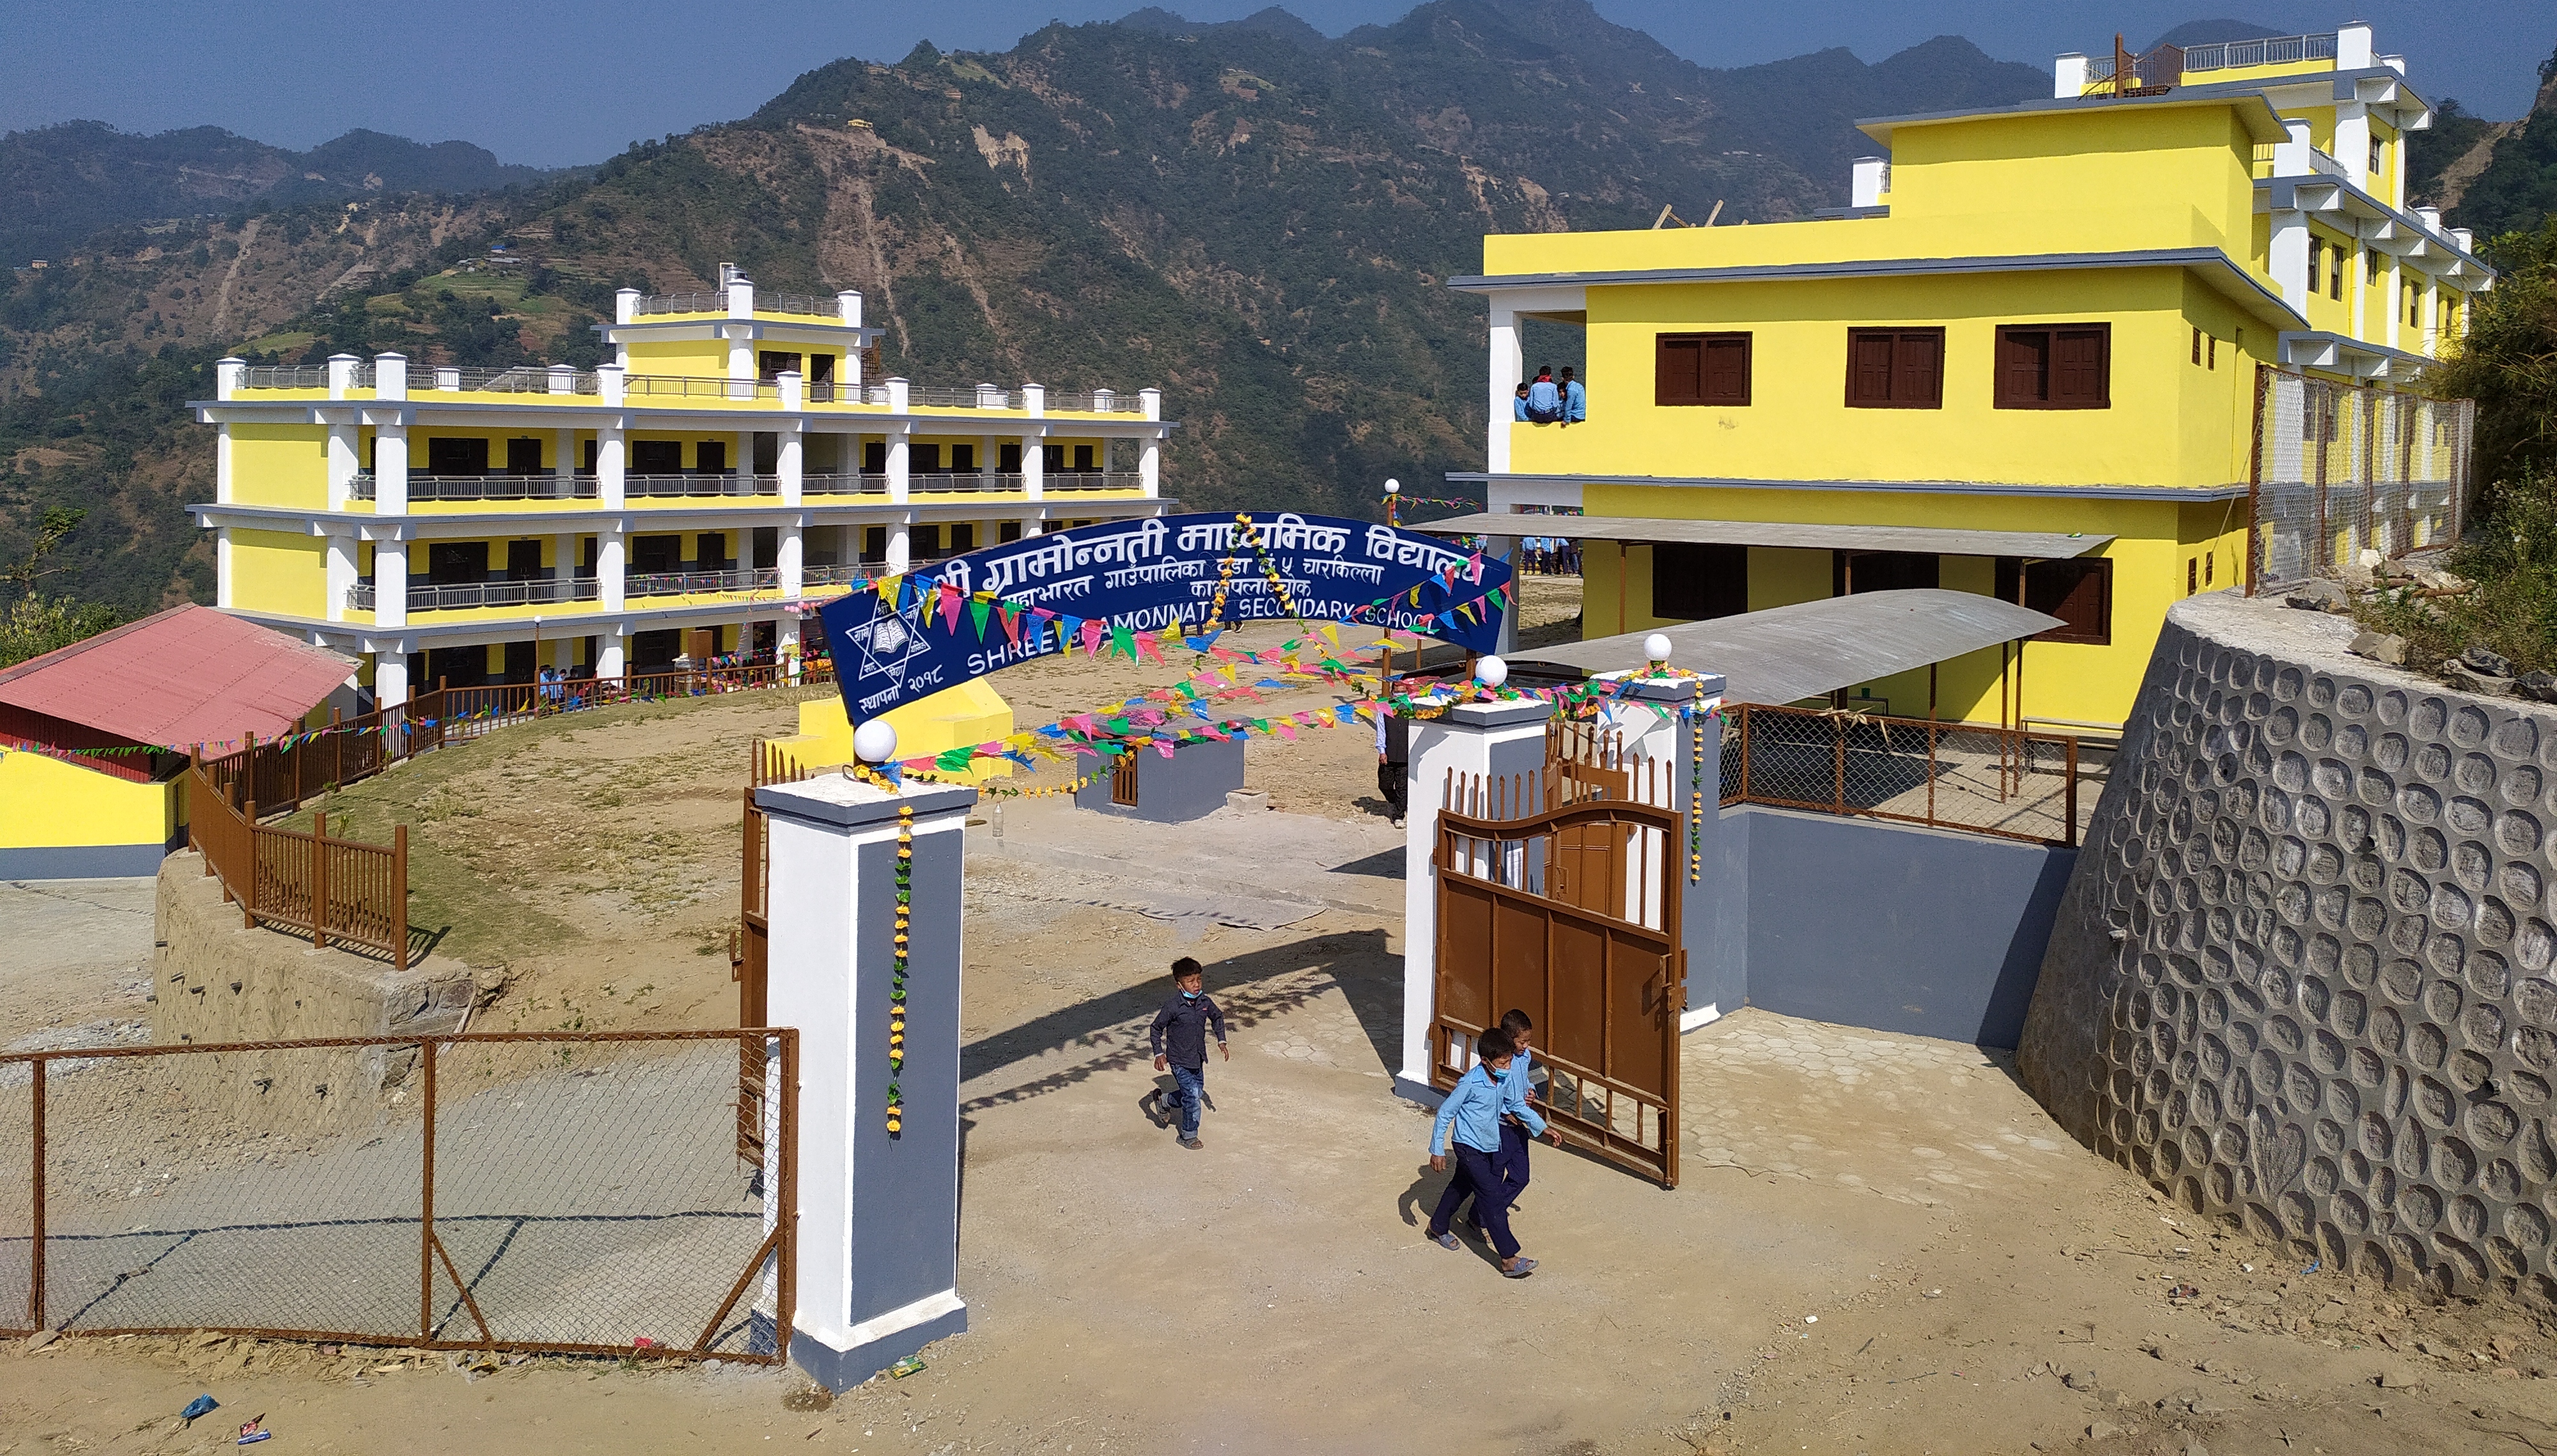 rs-75-billion-spent-for-school-reconstruction-in-kavre